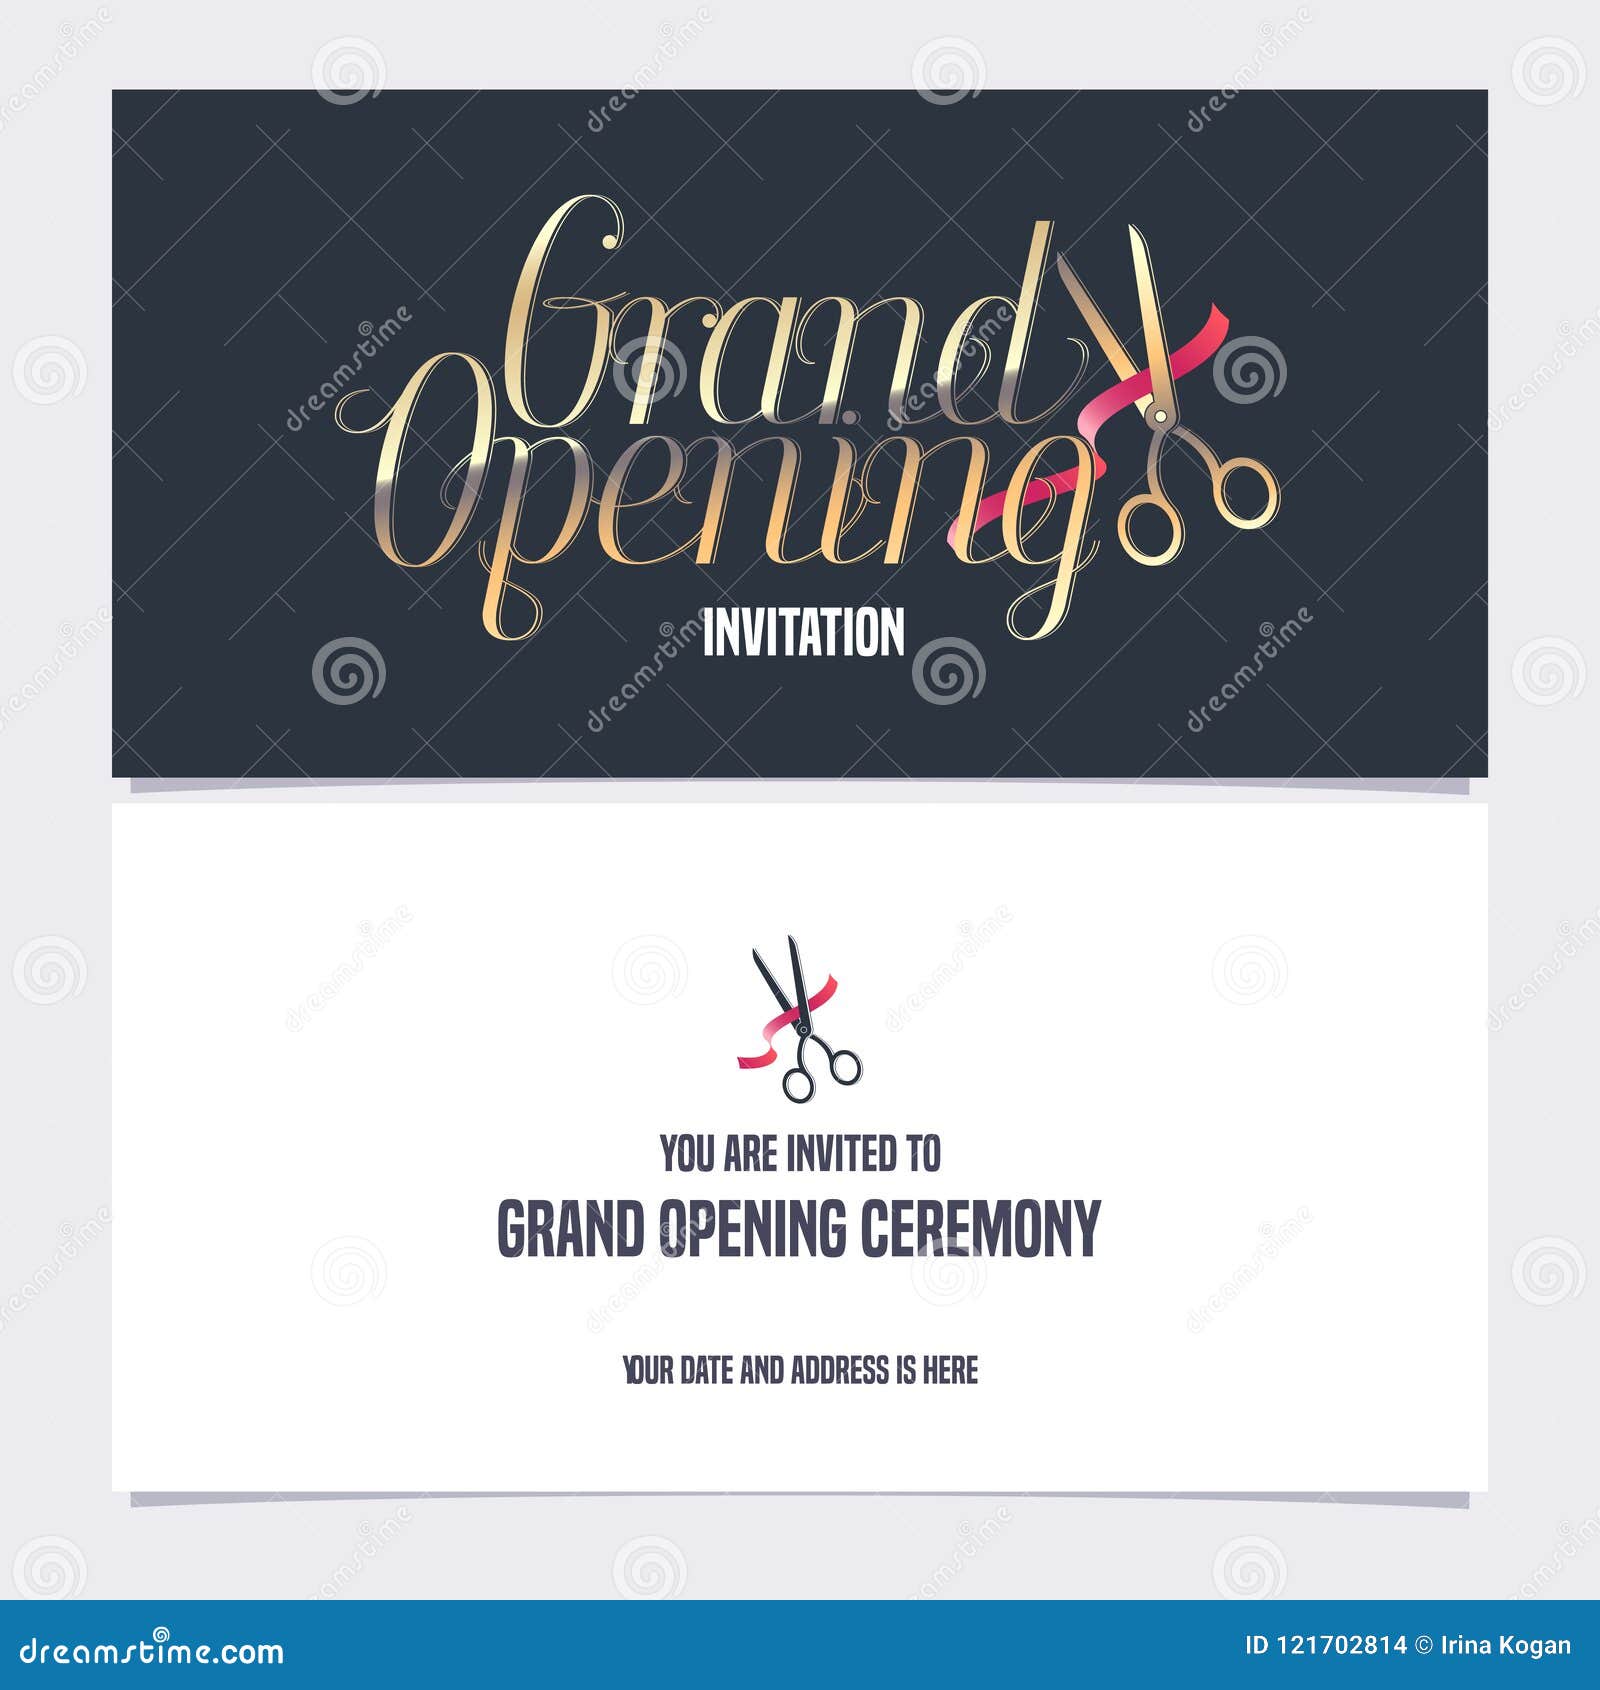 Grand Opening Photos